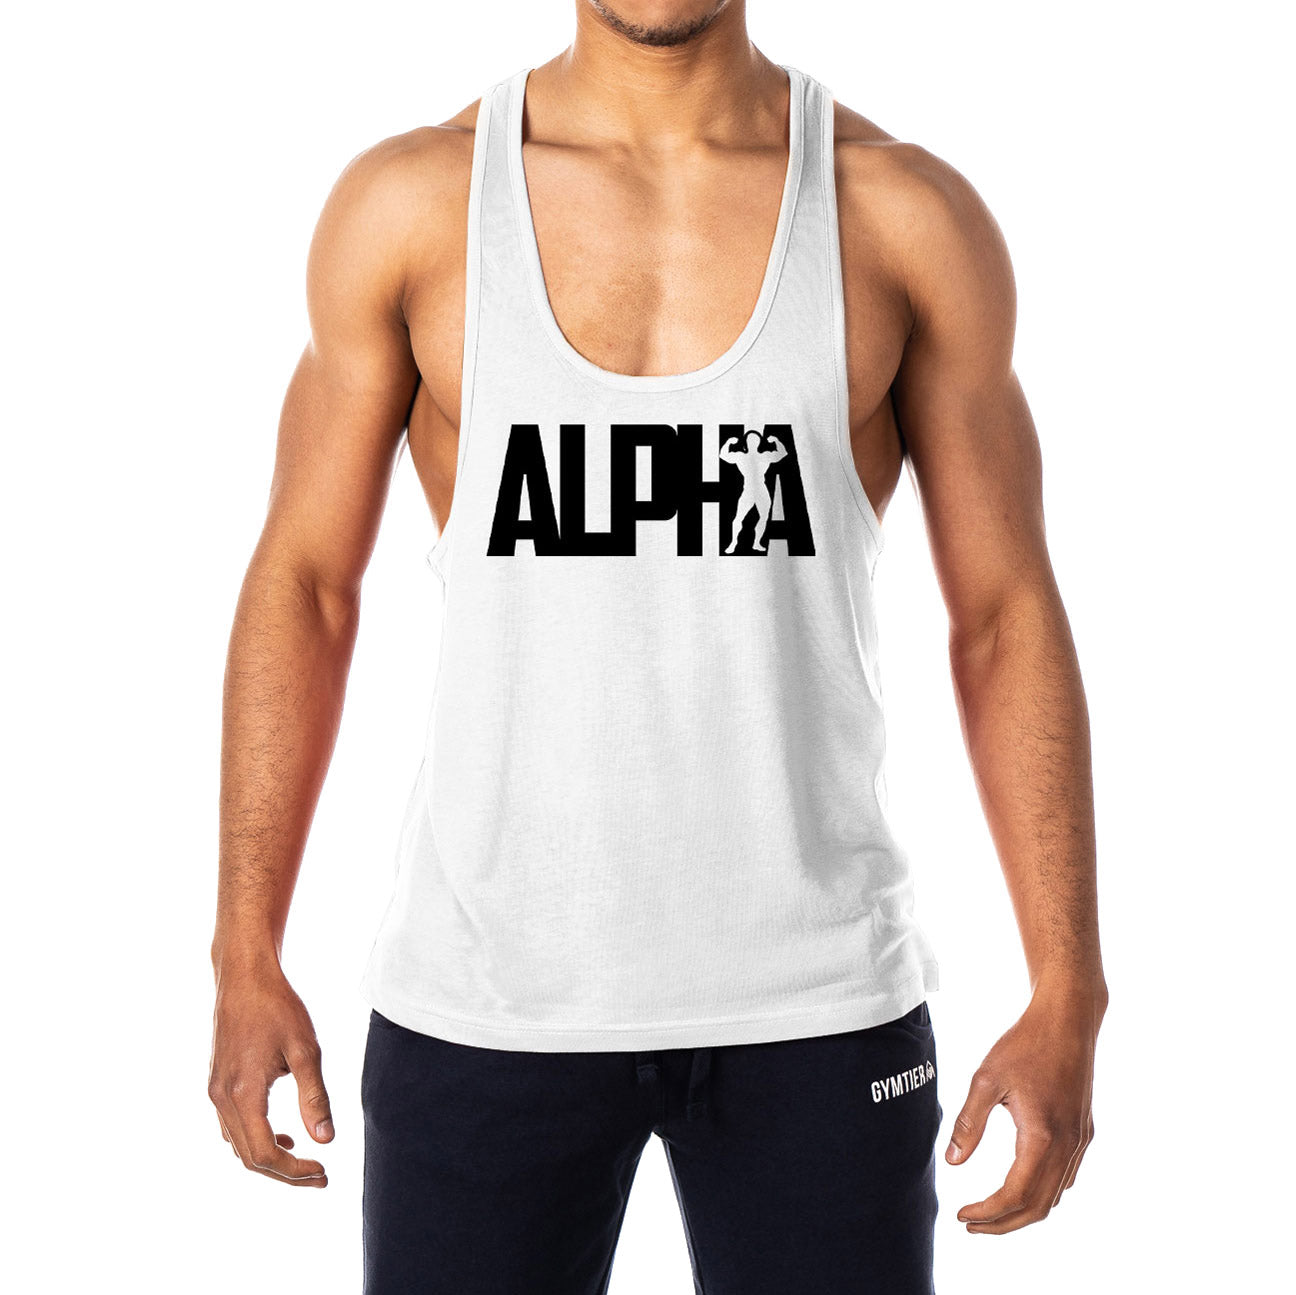 Alpha Mens Tank – Stringer Gymtier Top